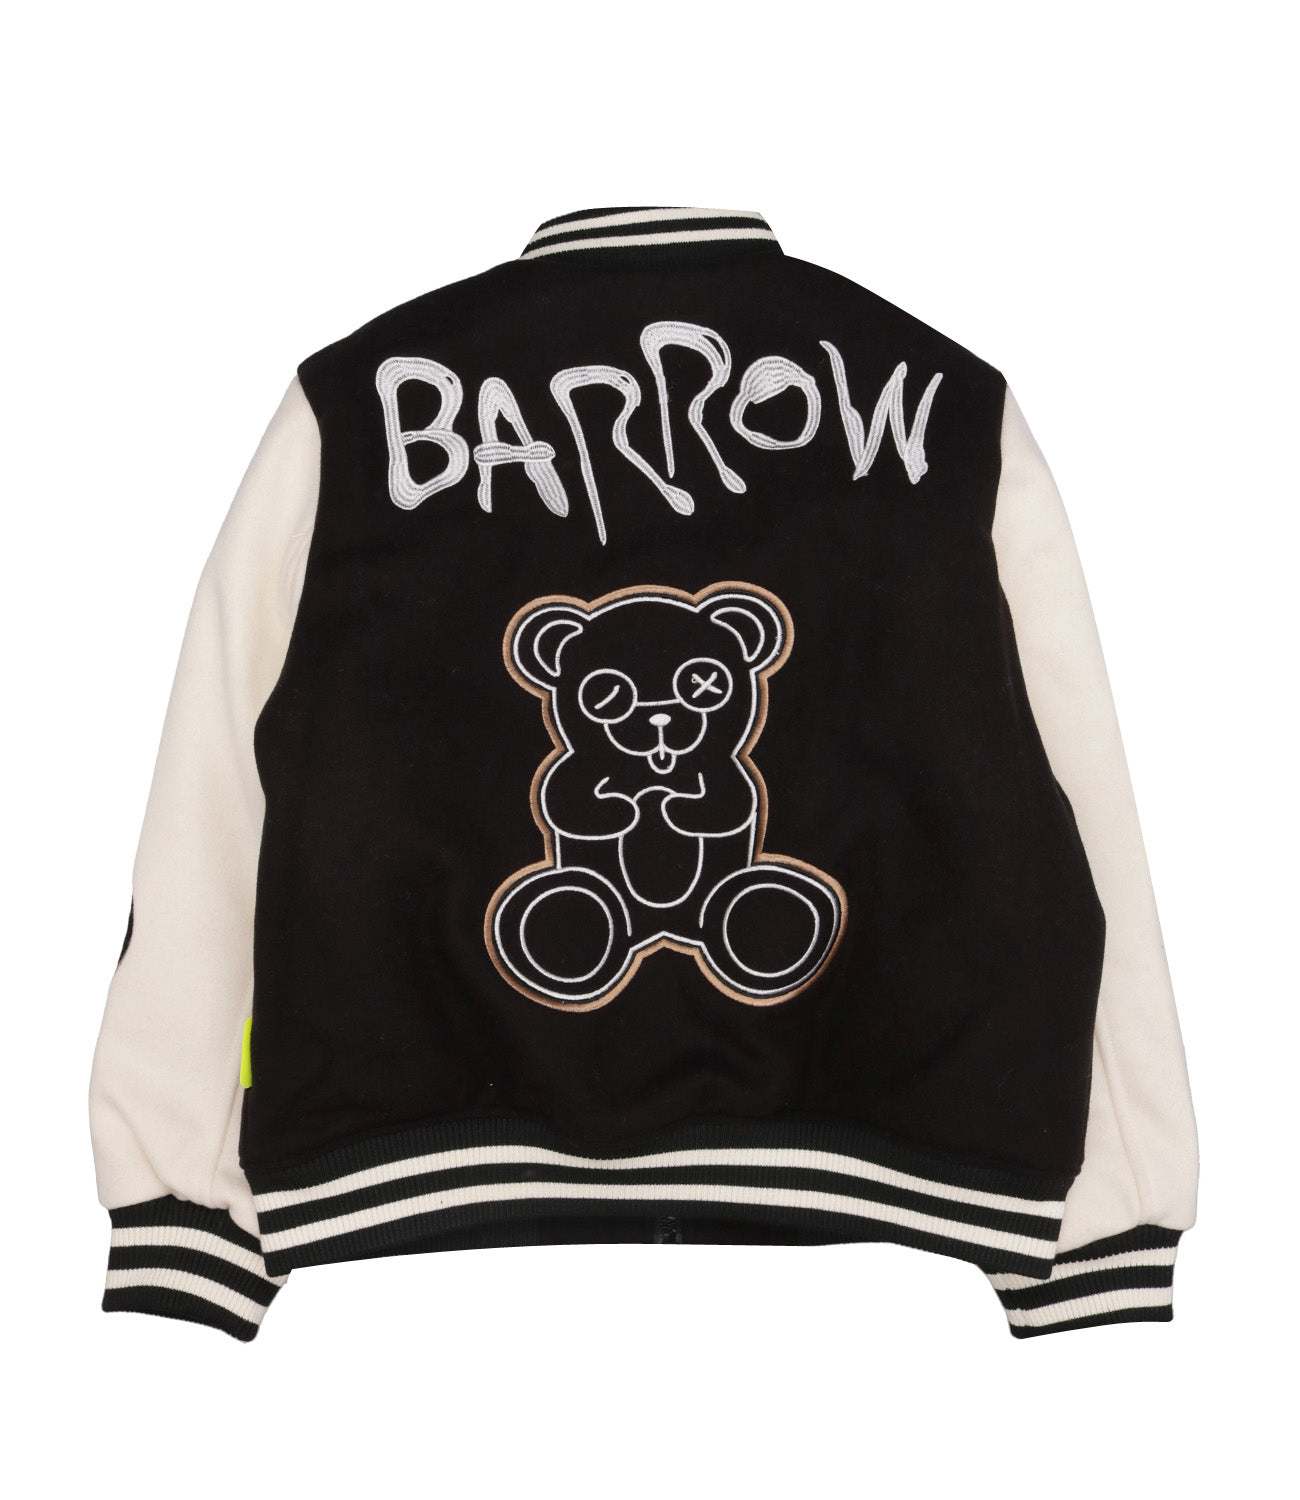 Barrow Kids | Black Jacket